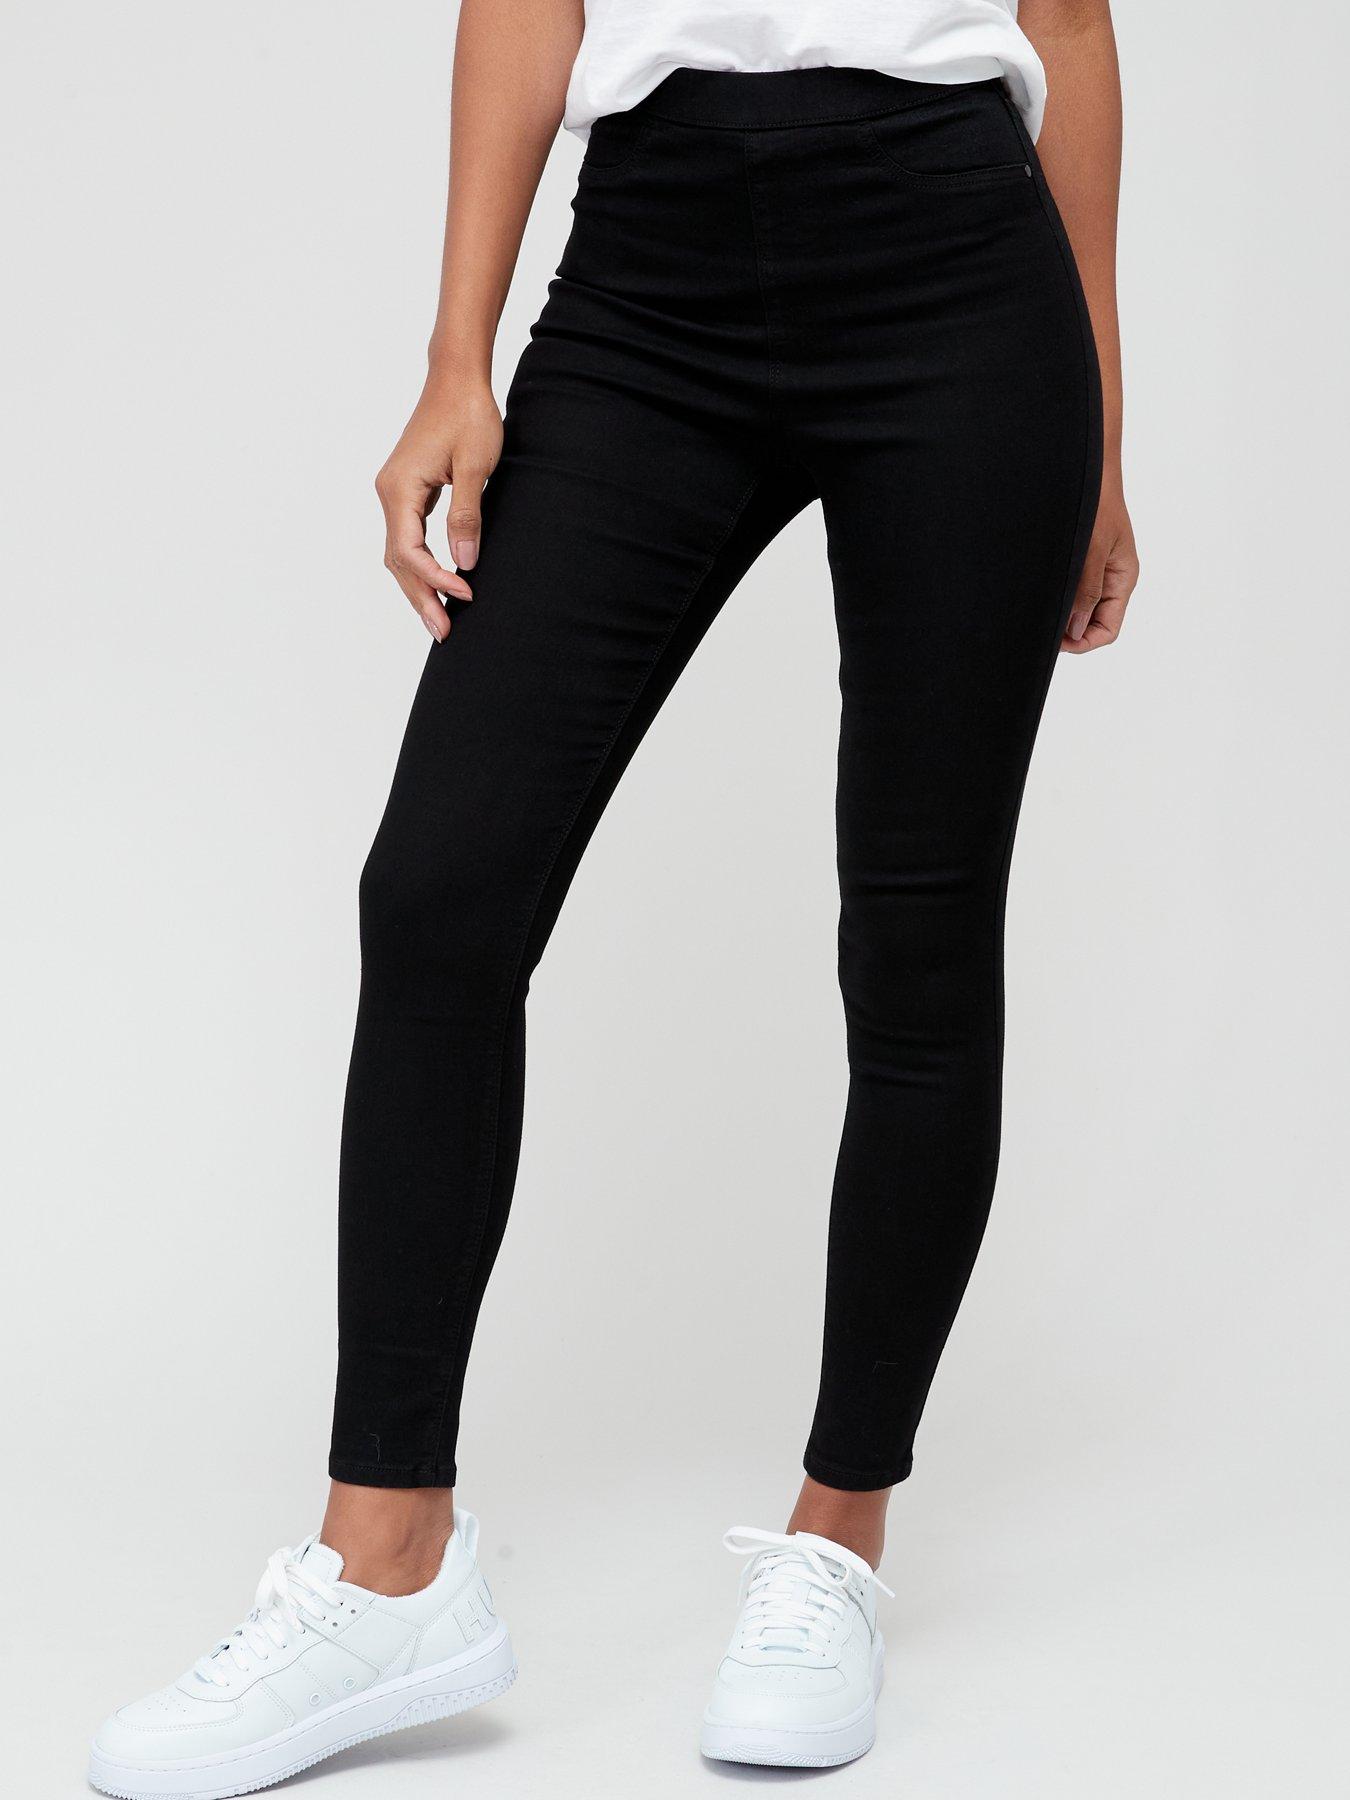 Black jeans jeggings with back pockets